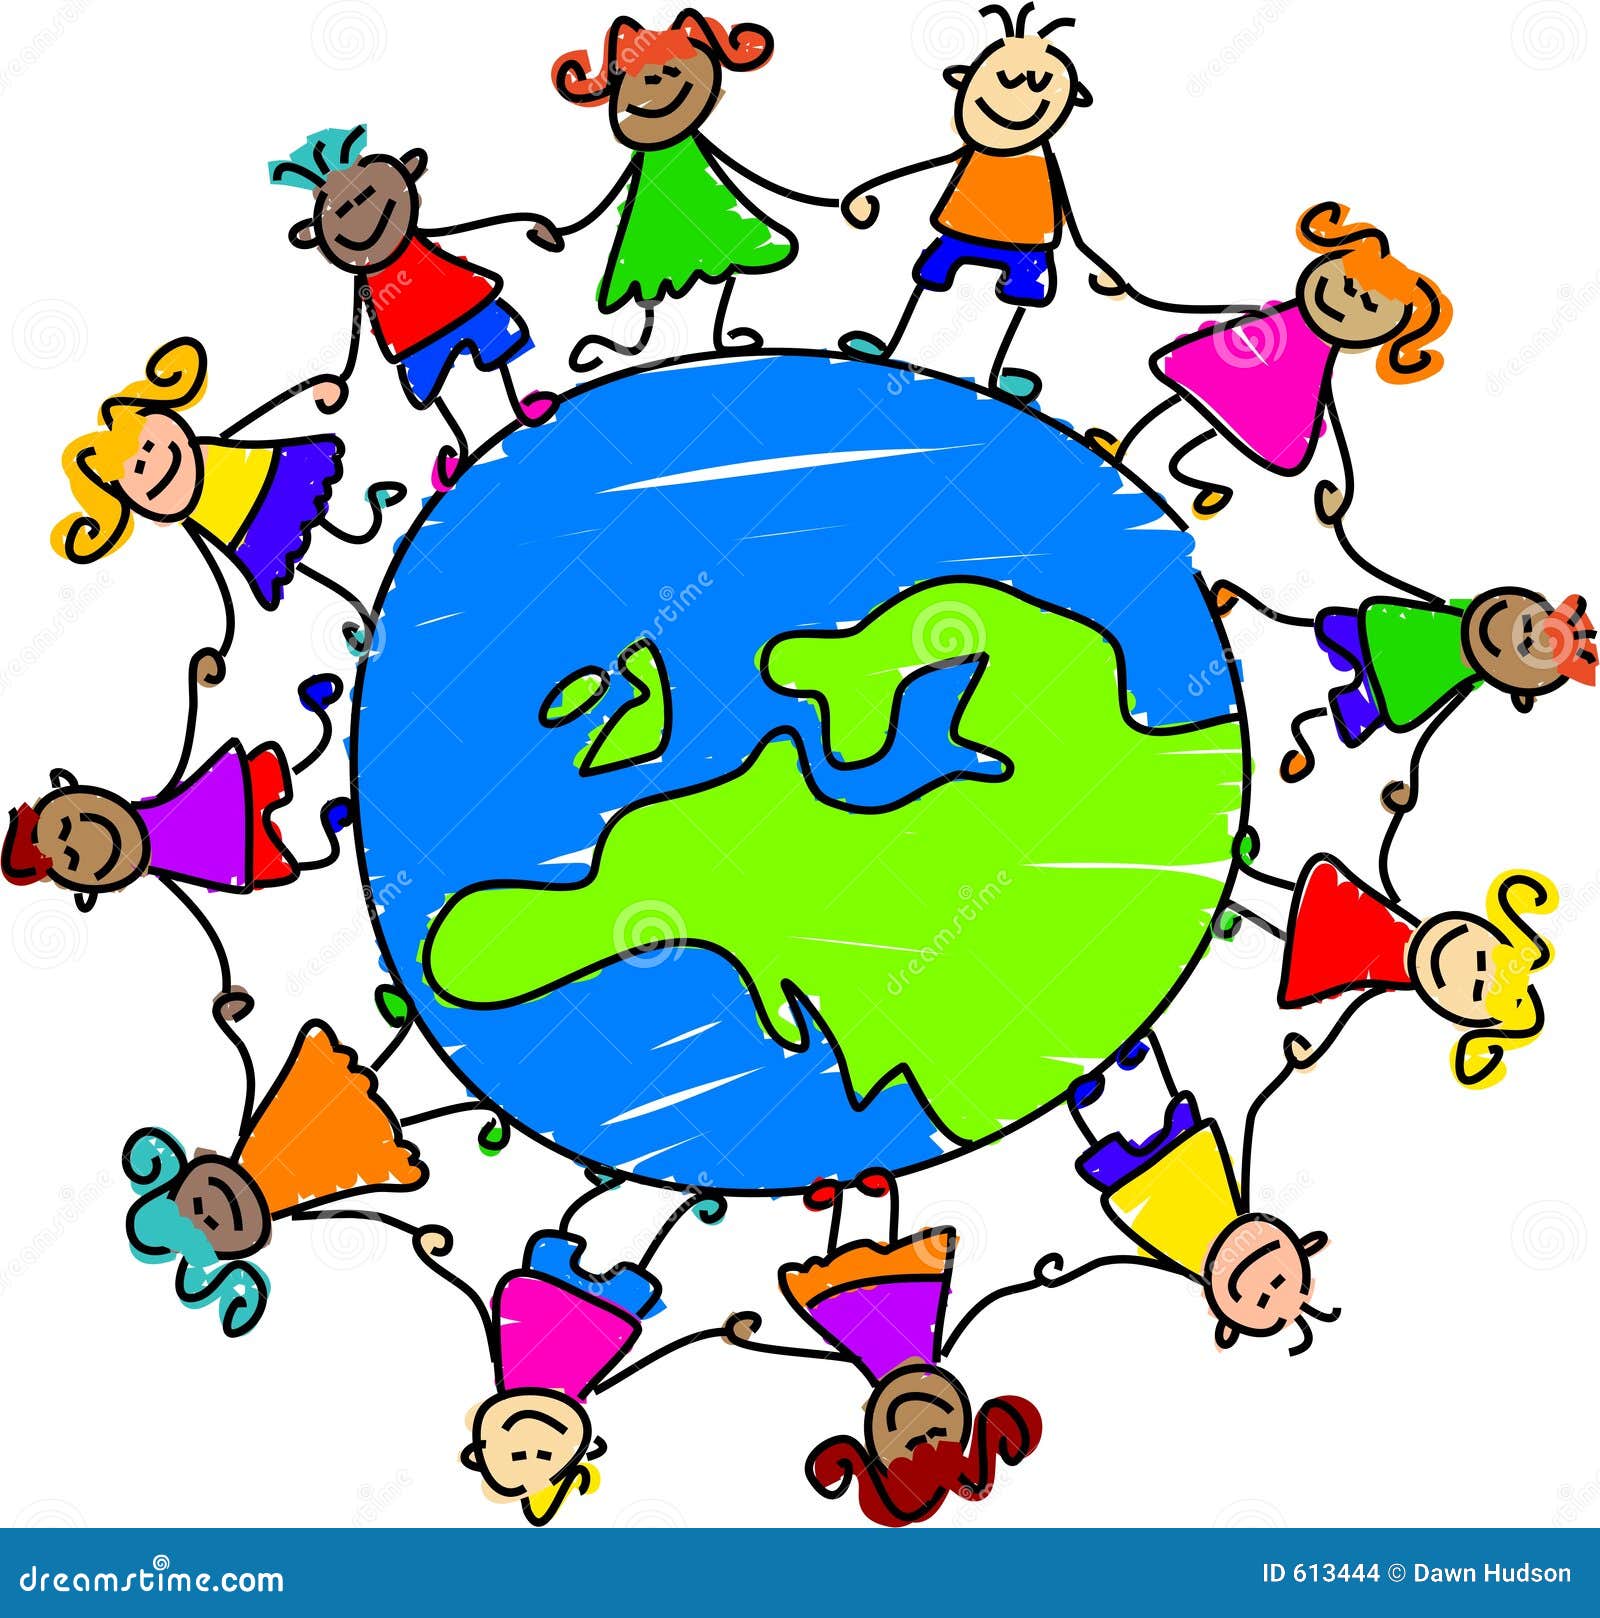 European Kids Stock Images - Image: 613444